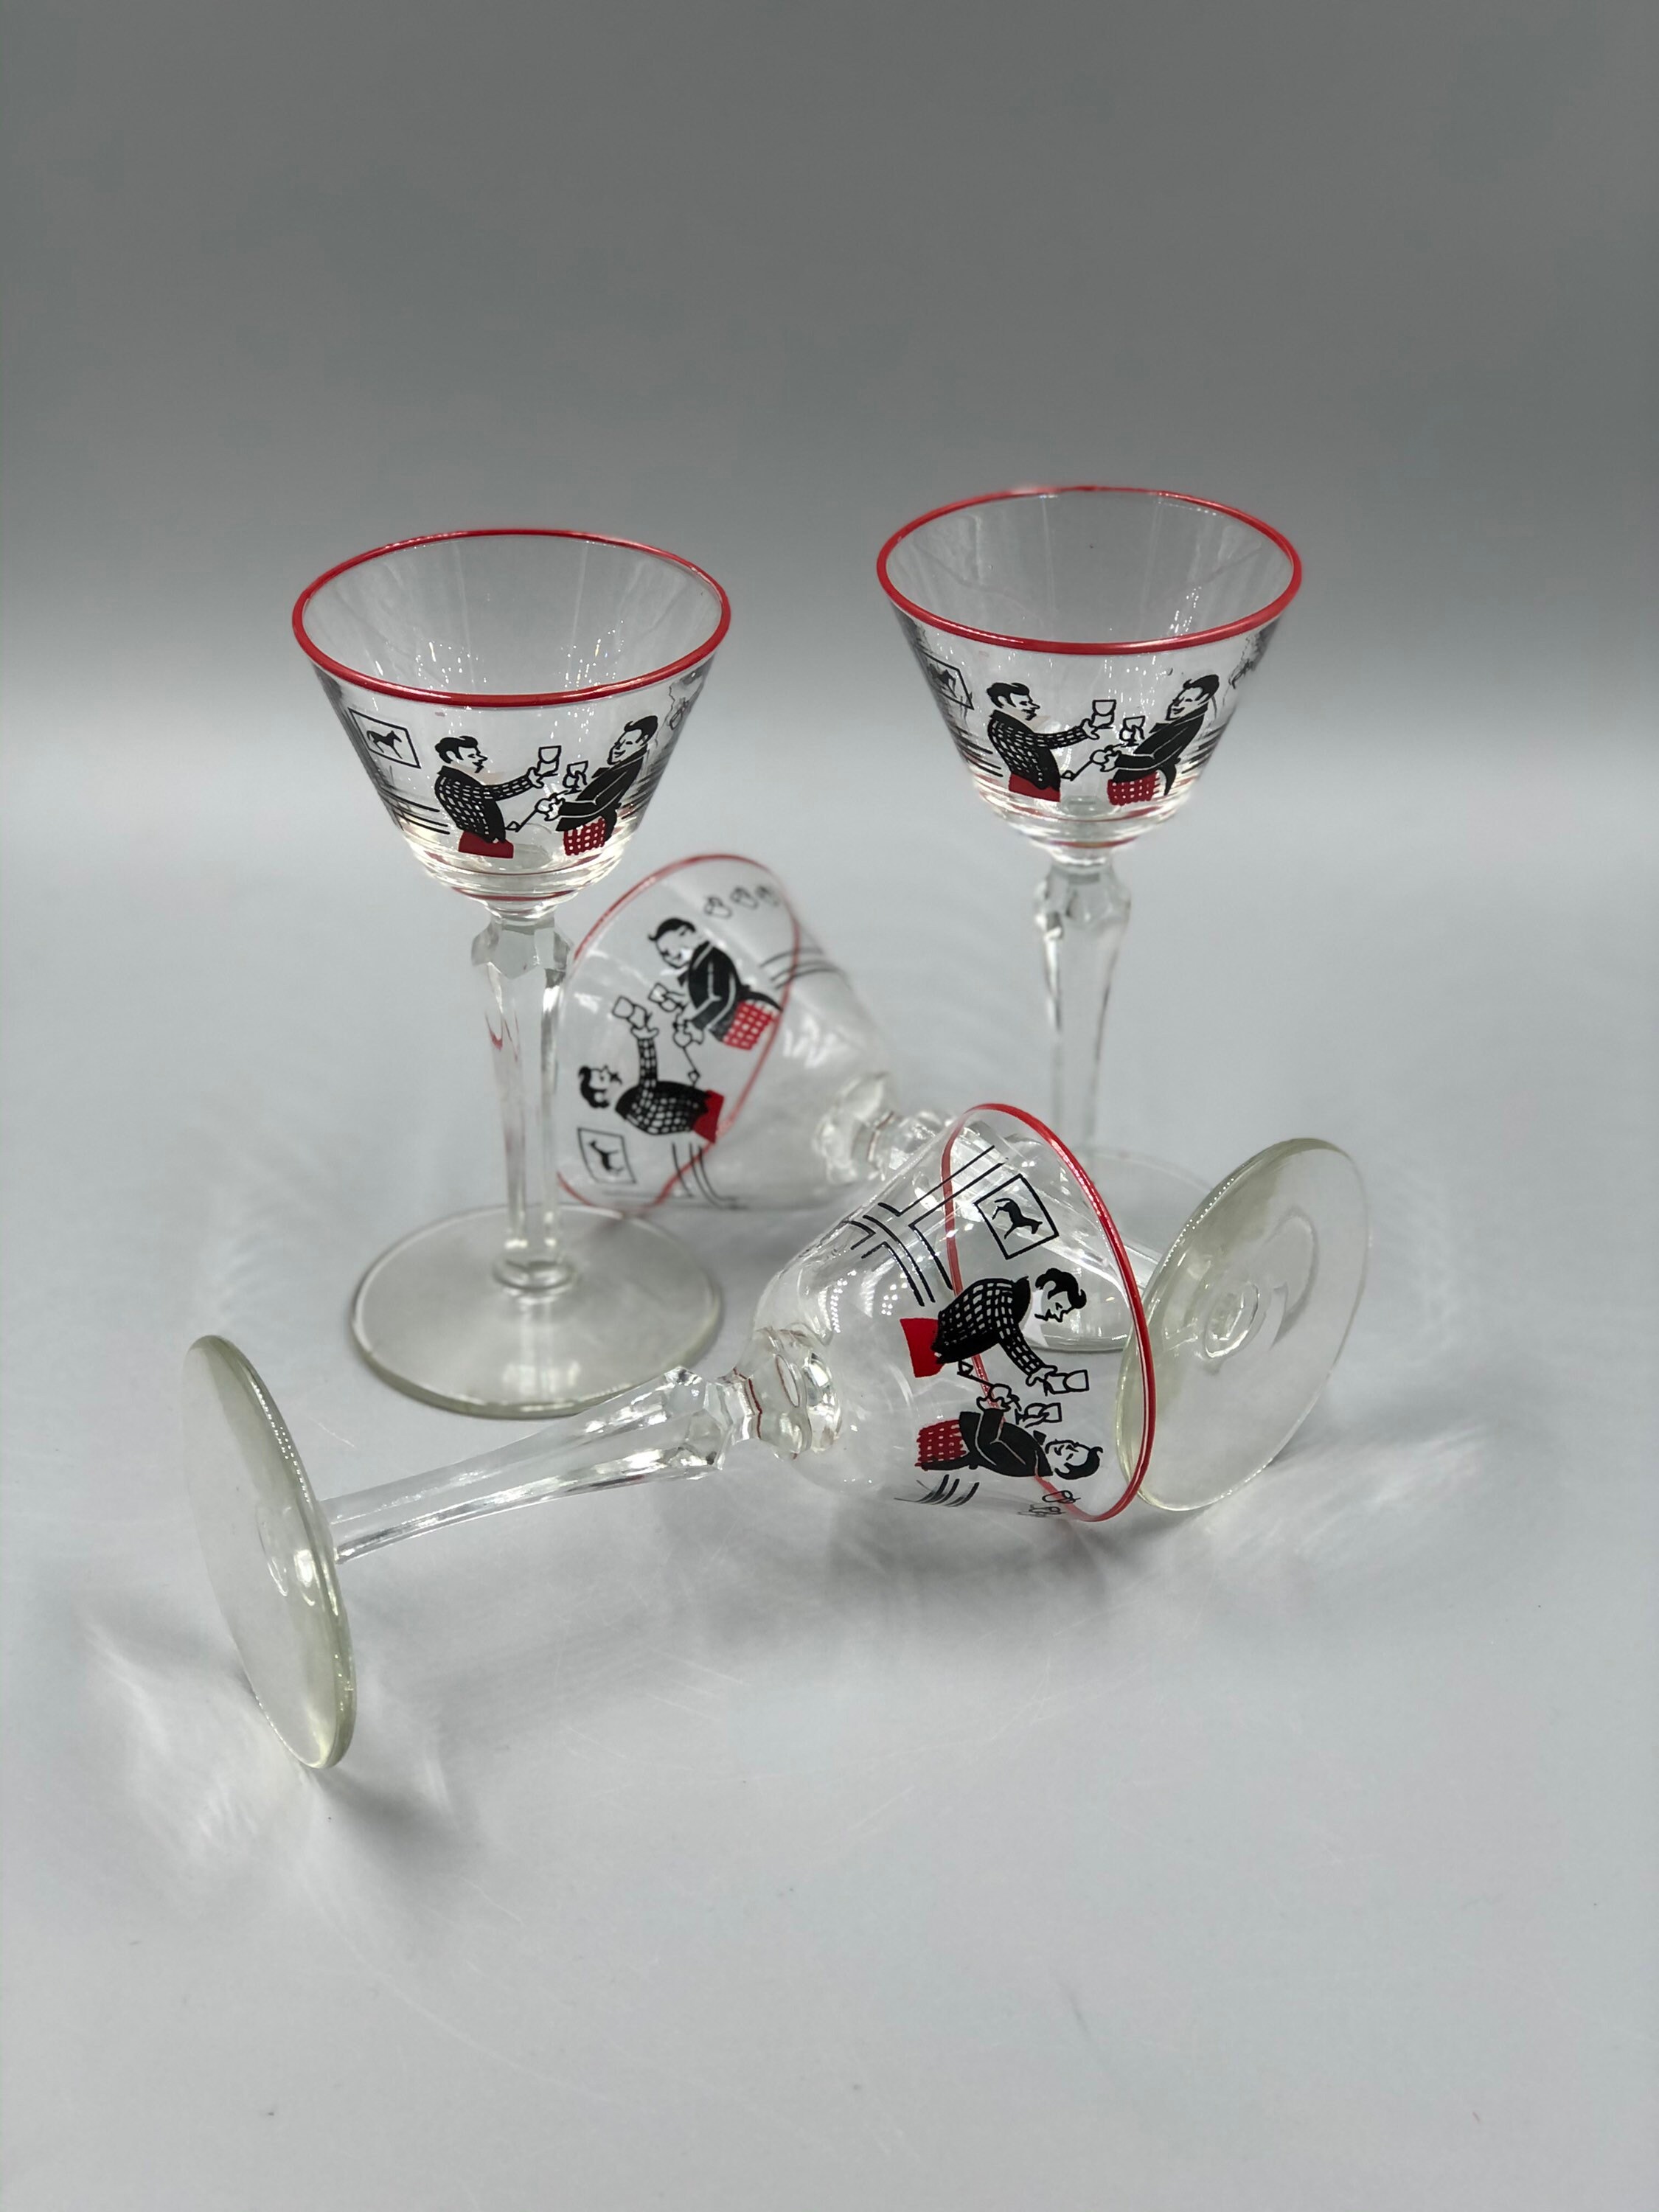 PartyE 2oz Mini Martini Glass - 12ct